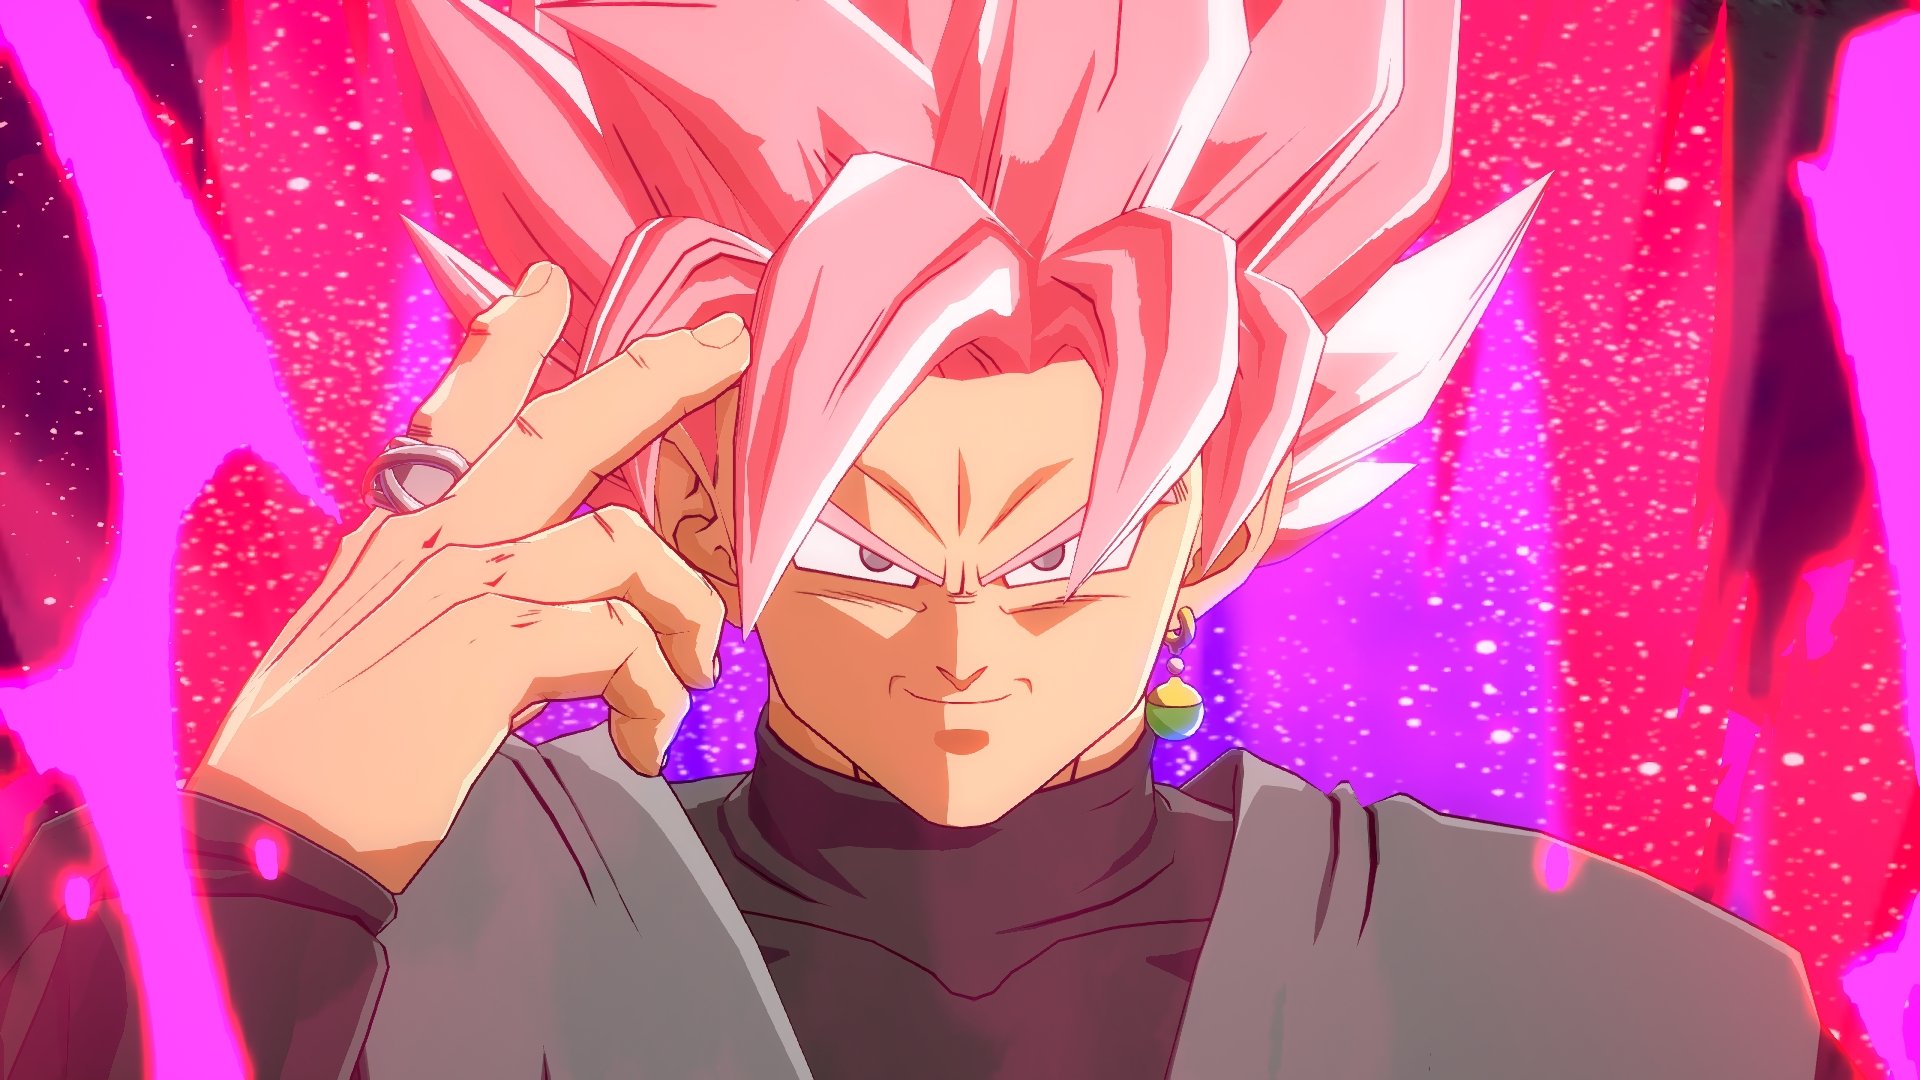 Black Goku pink hair palette 4 by THEDATAGRAPHICS on DeviantArt